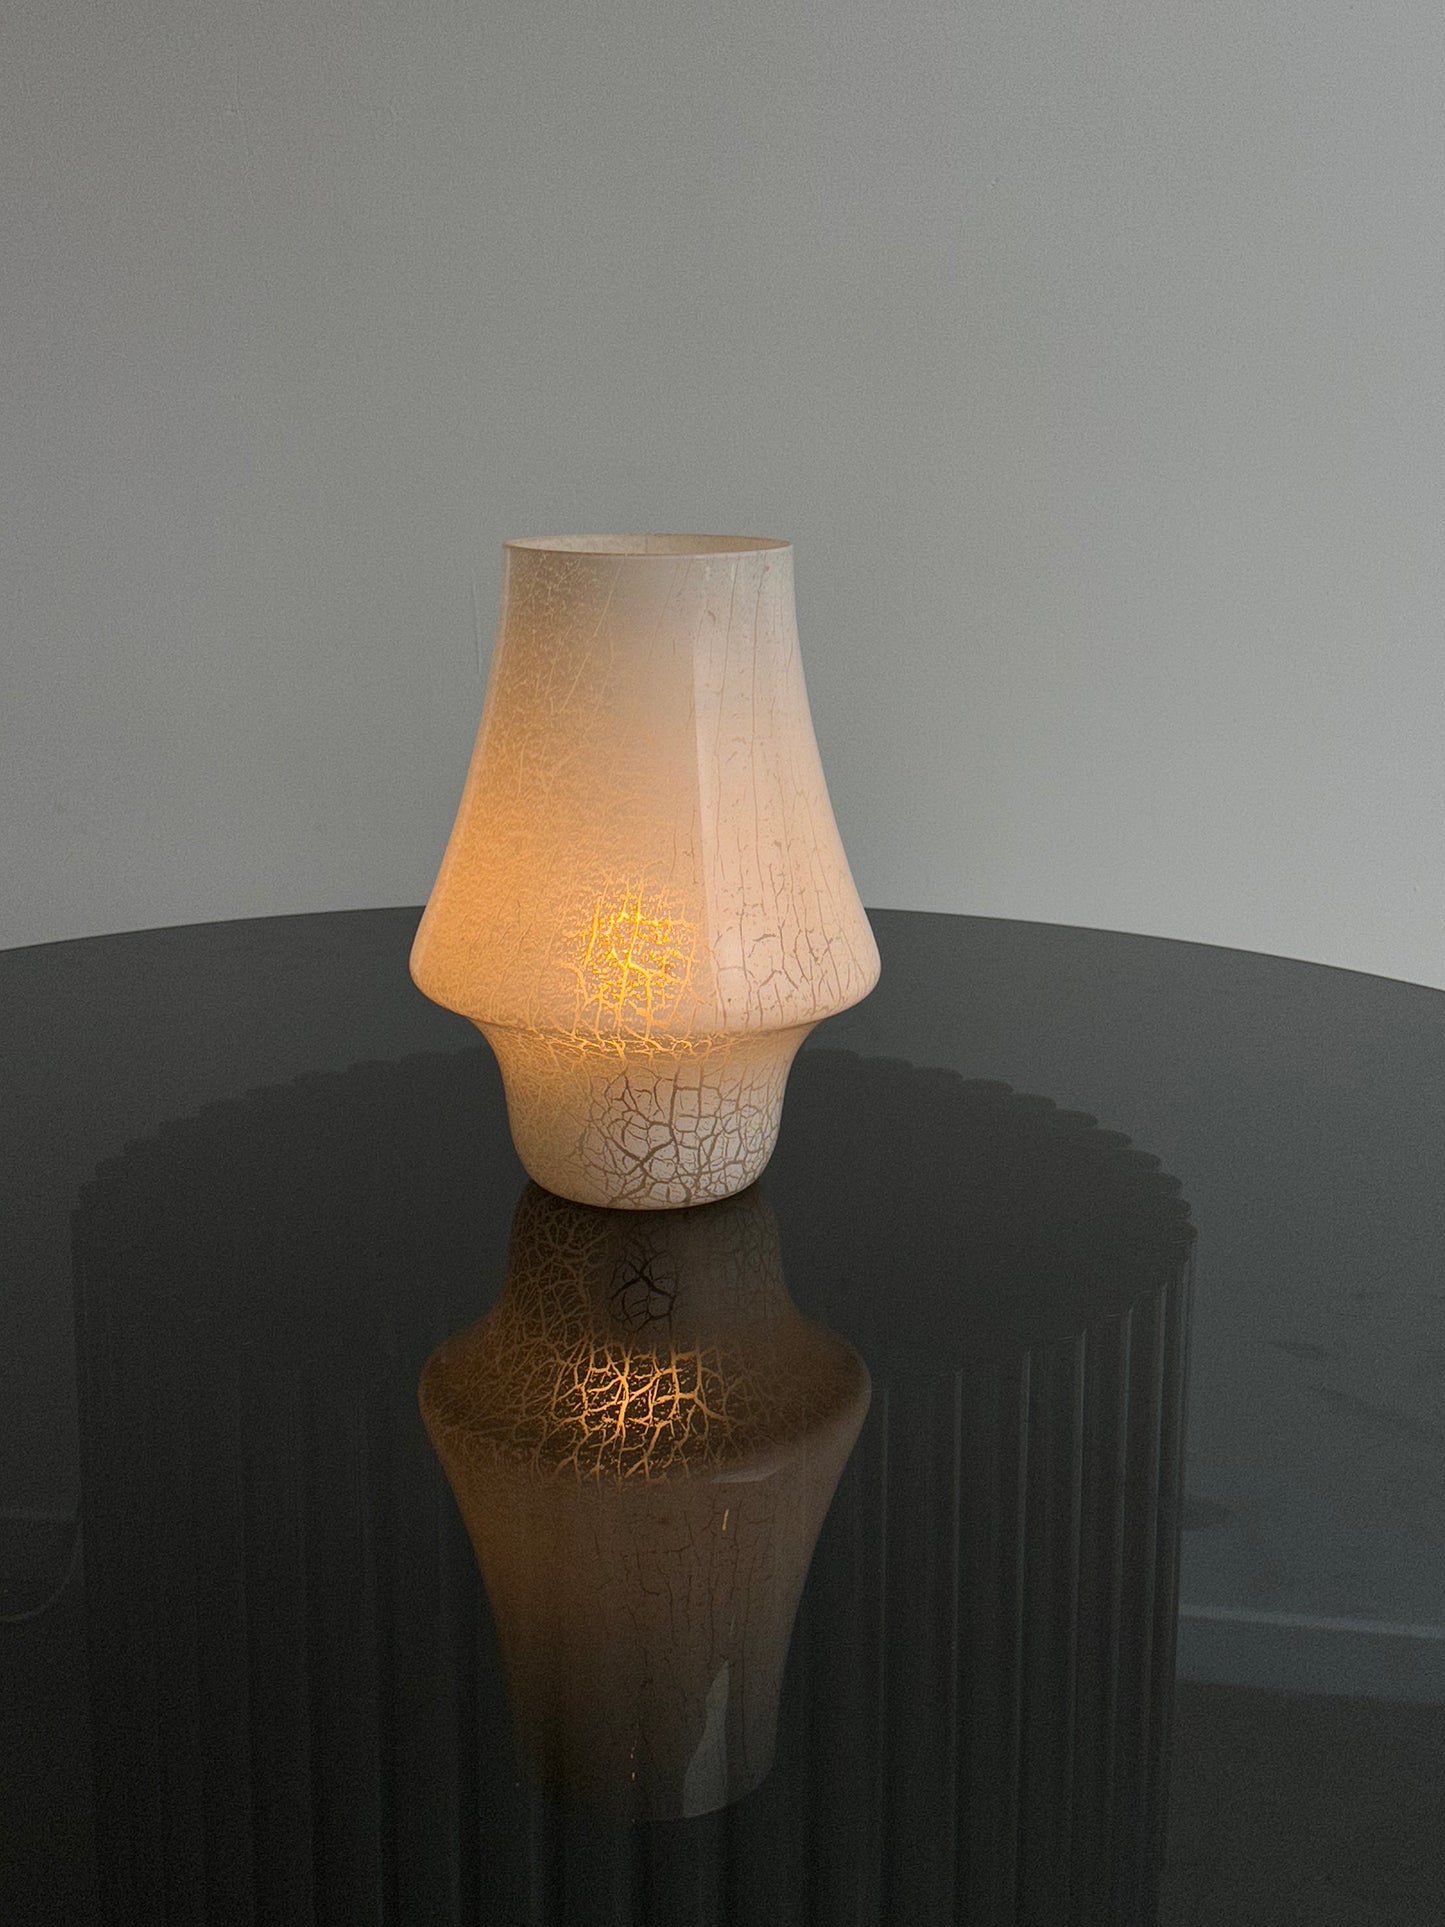 Paolo Venini White Murano Glass Mushroom Table Lamp, 1960